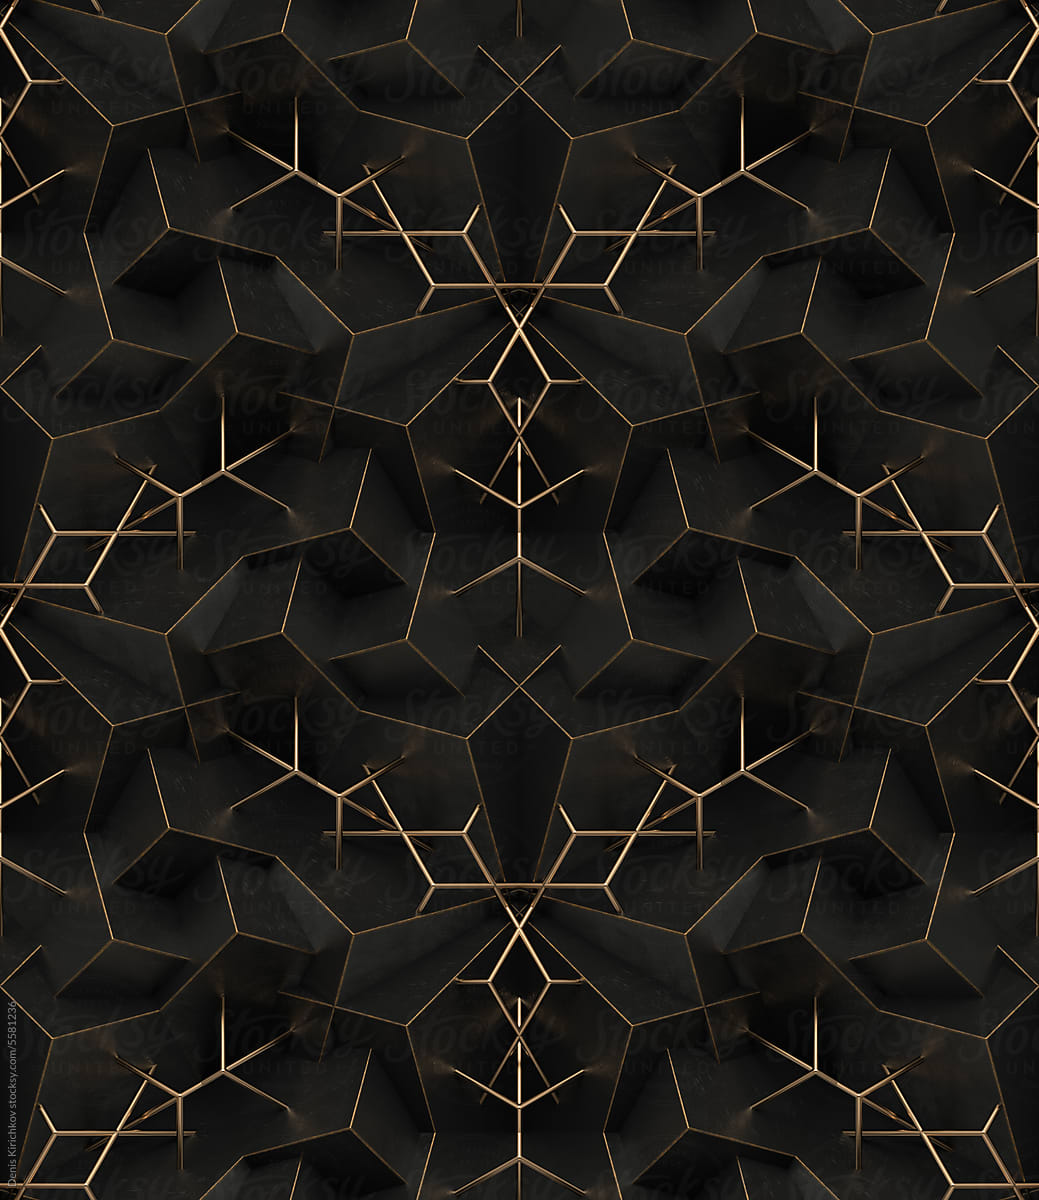 Futuristic black with gold wallpaper pattern.